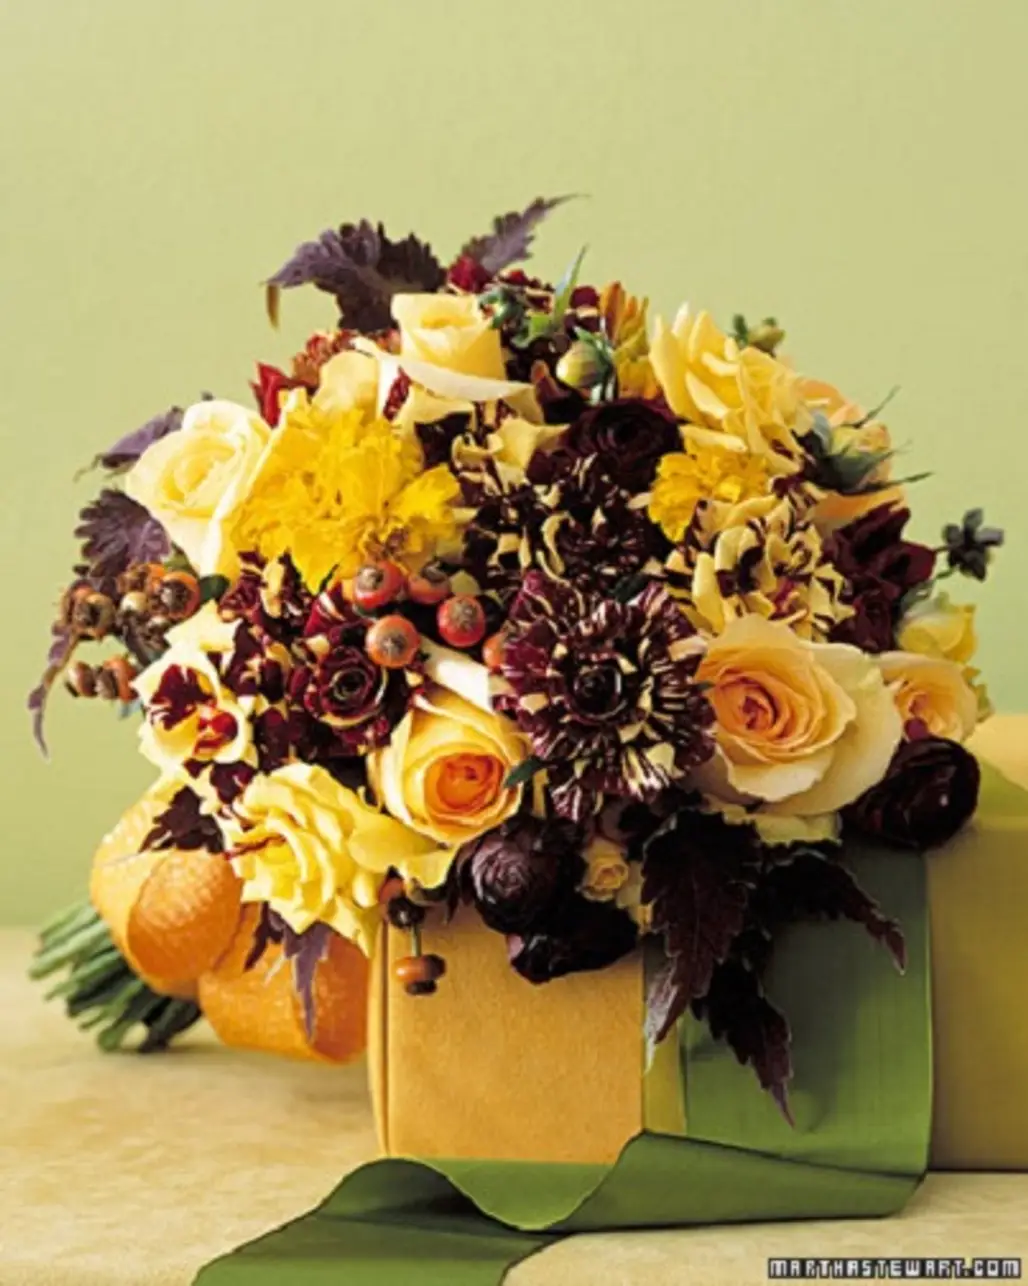 Hocus Pocus Roses: Magical Fall Wedding Flowers...